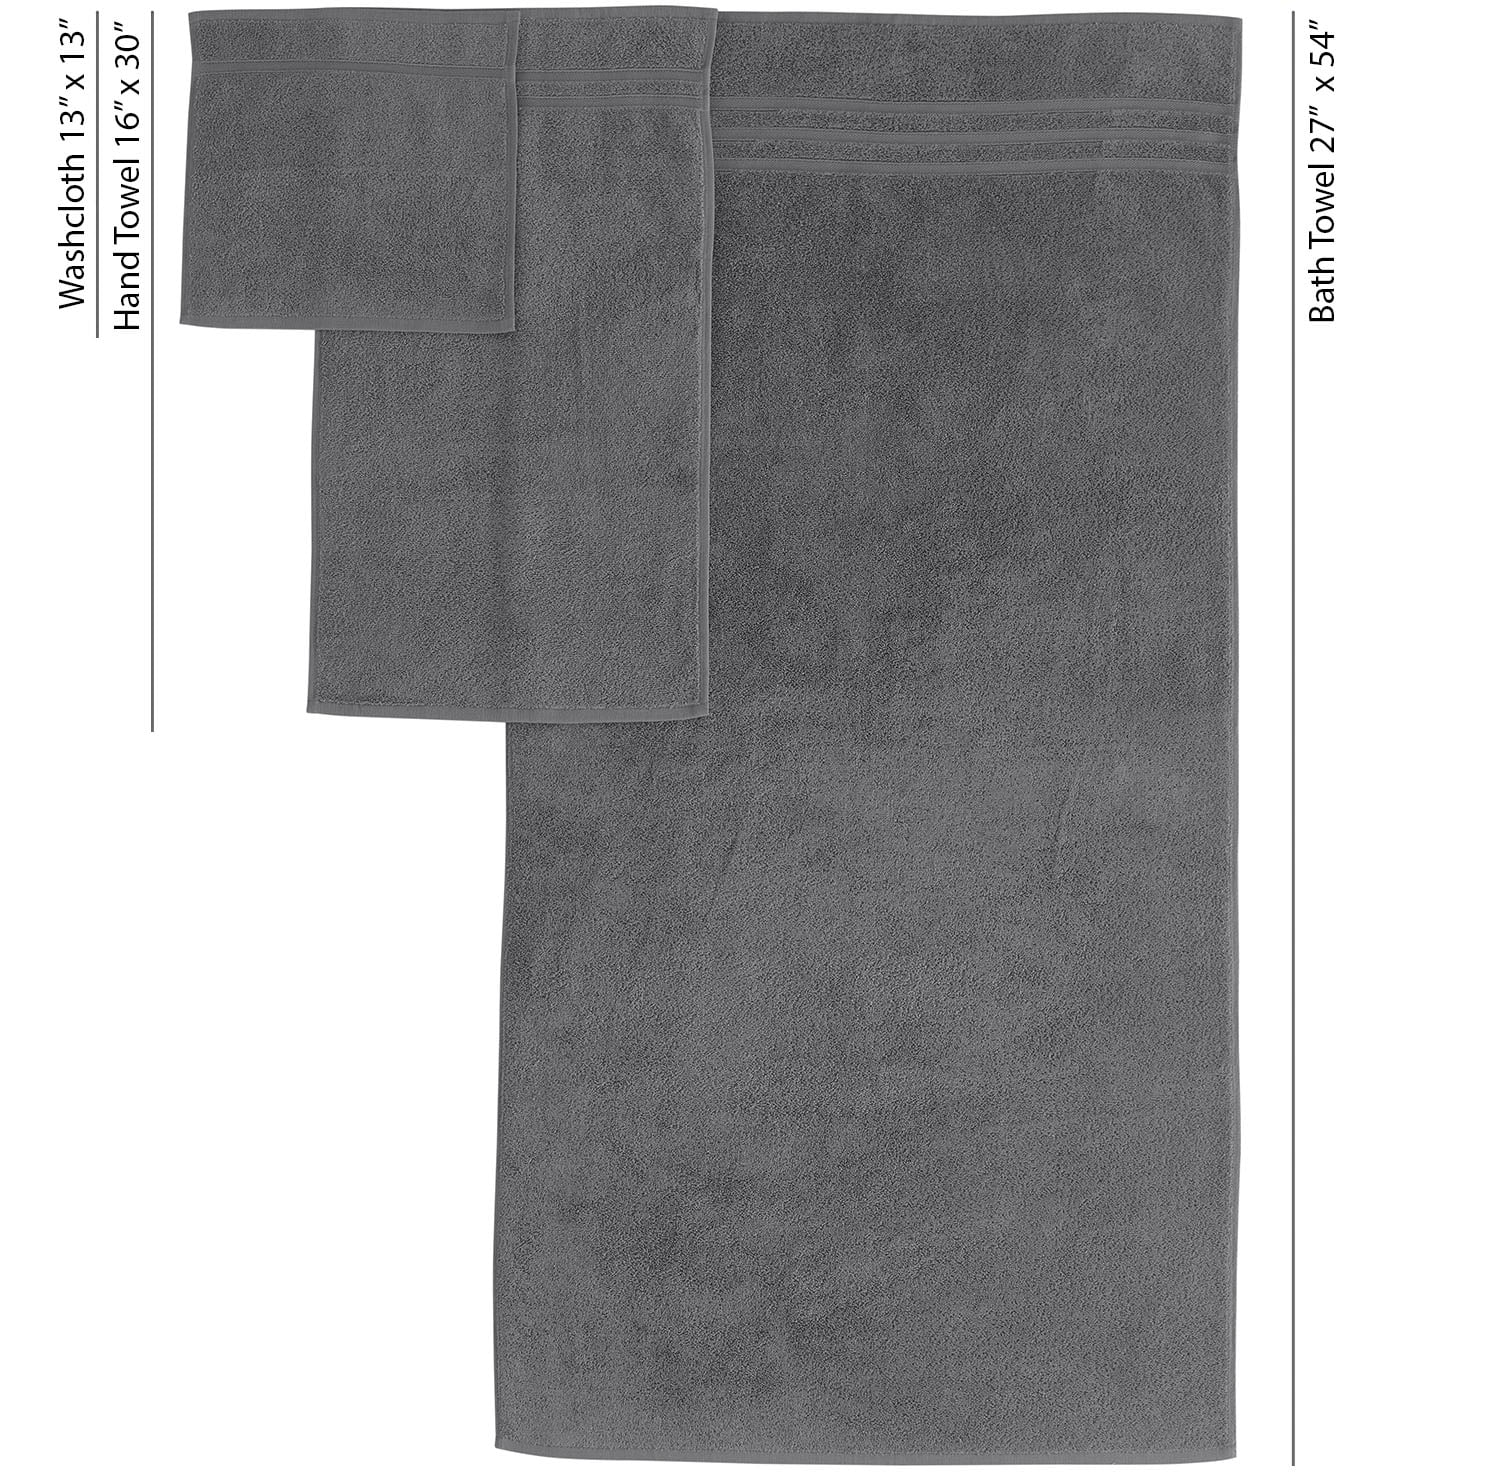 Enchasoft Turkish Cotton Bath Sheet 2-piece Set - 8239849